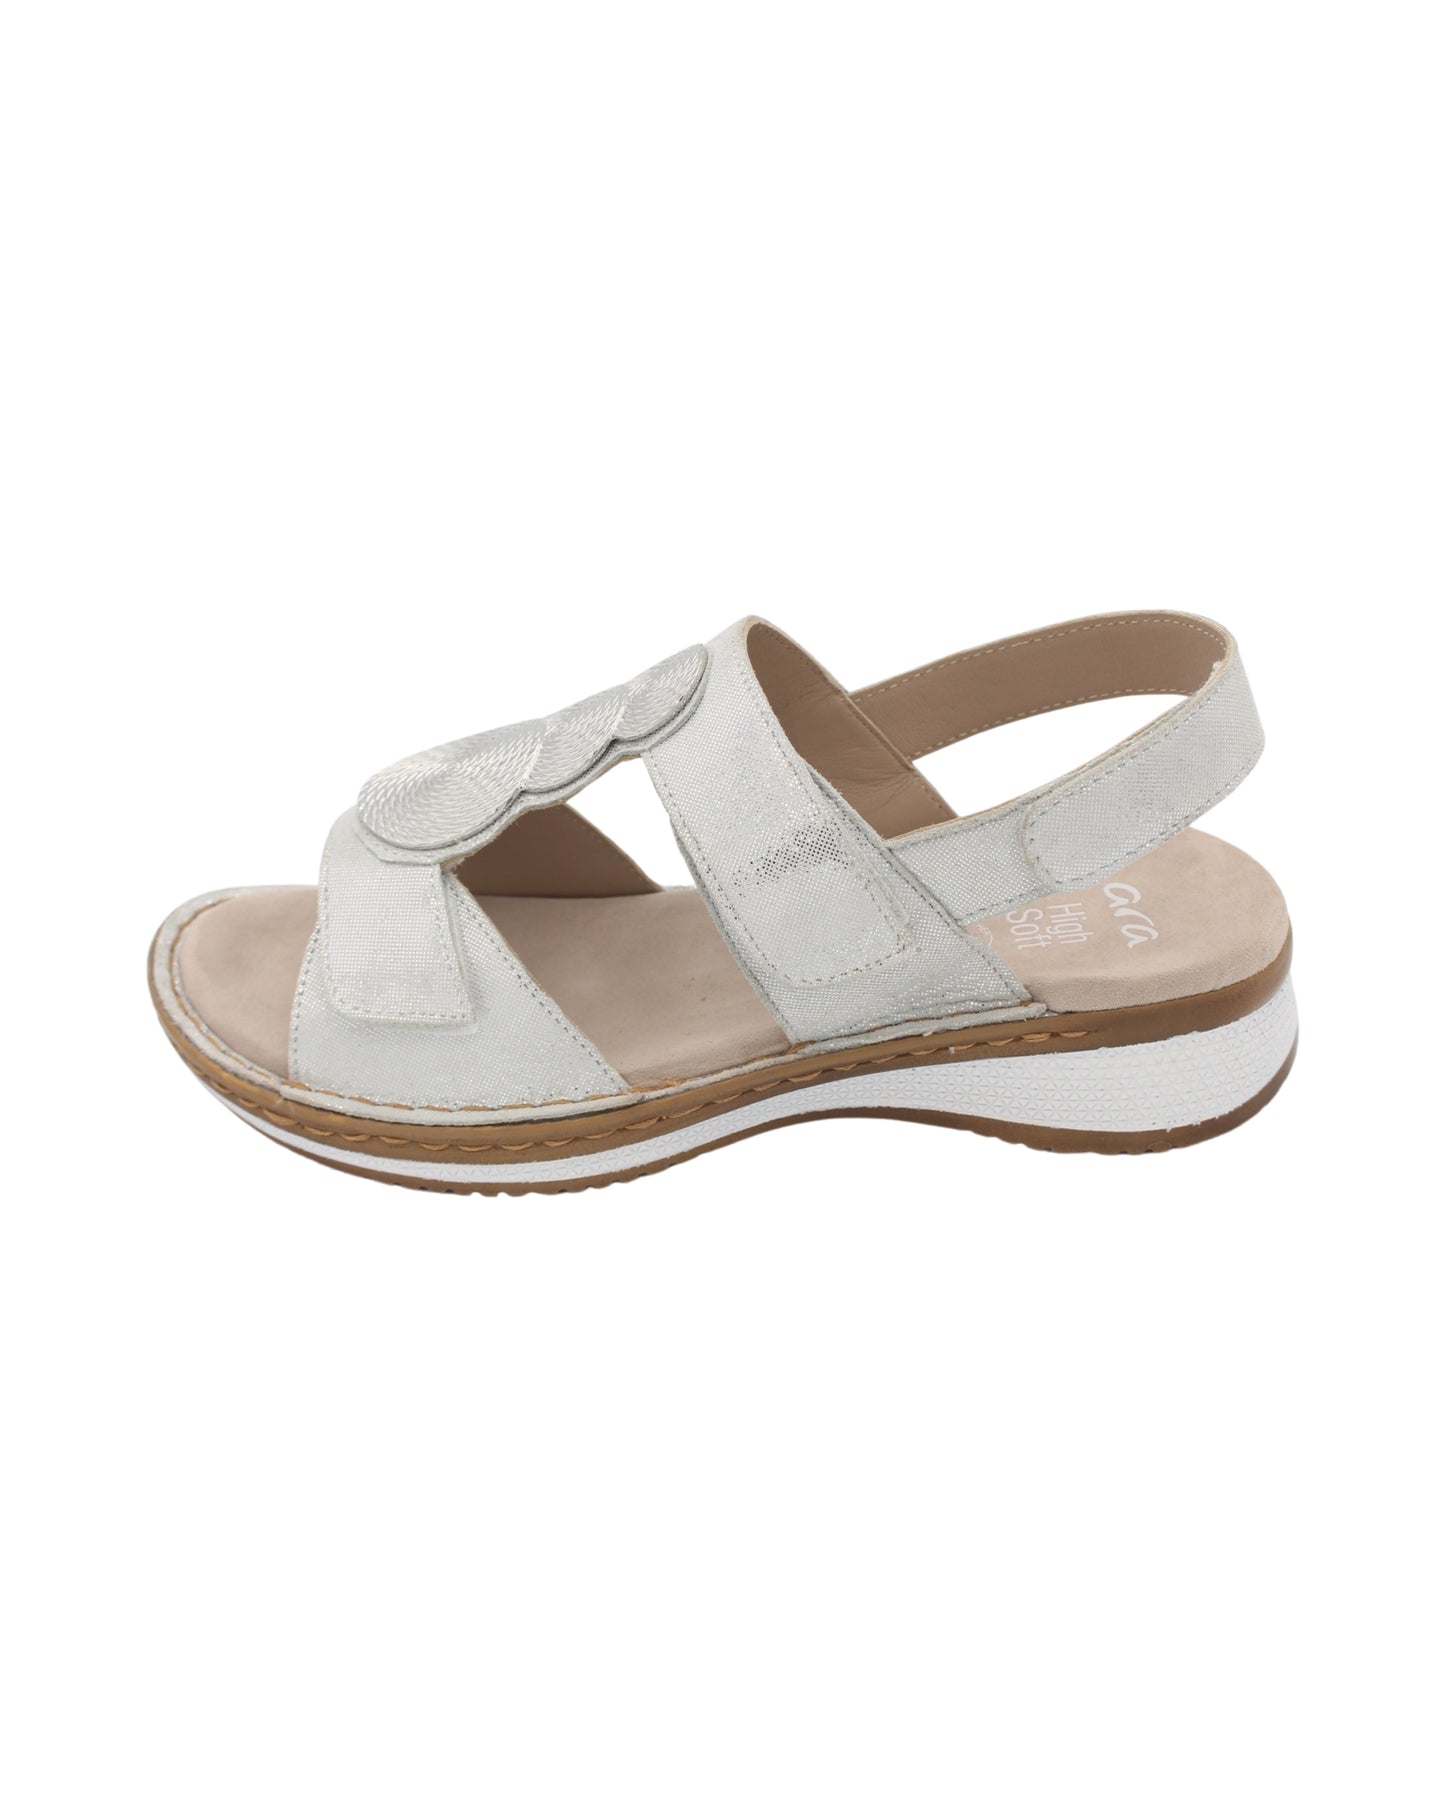 Ara - Ladies Shoes Sandals Silver, White (2211)